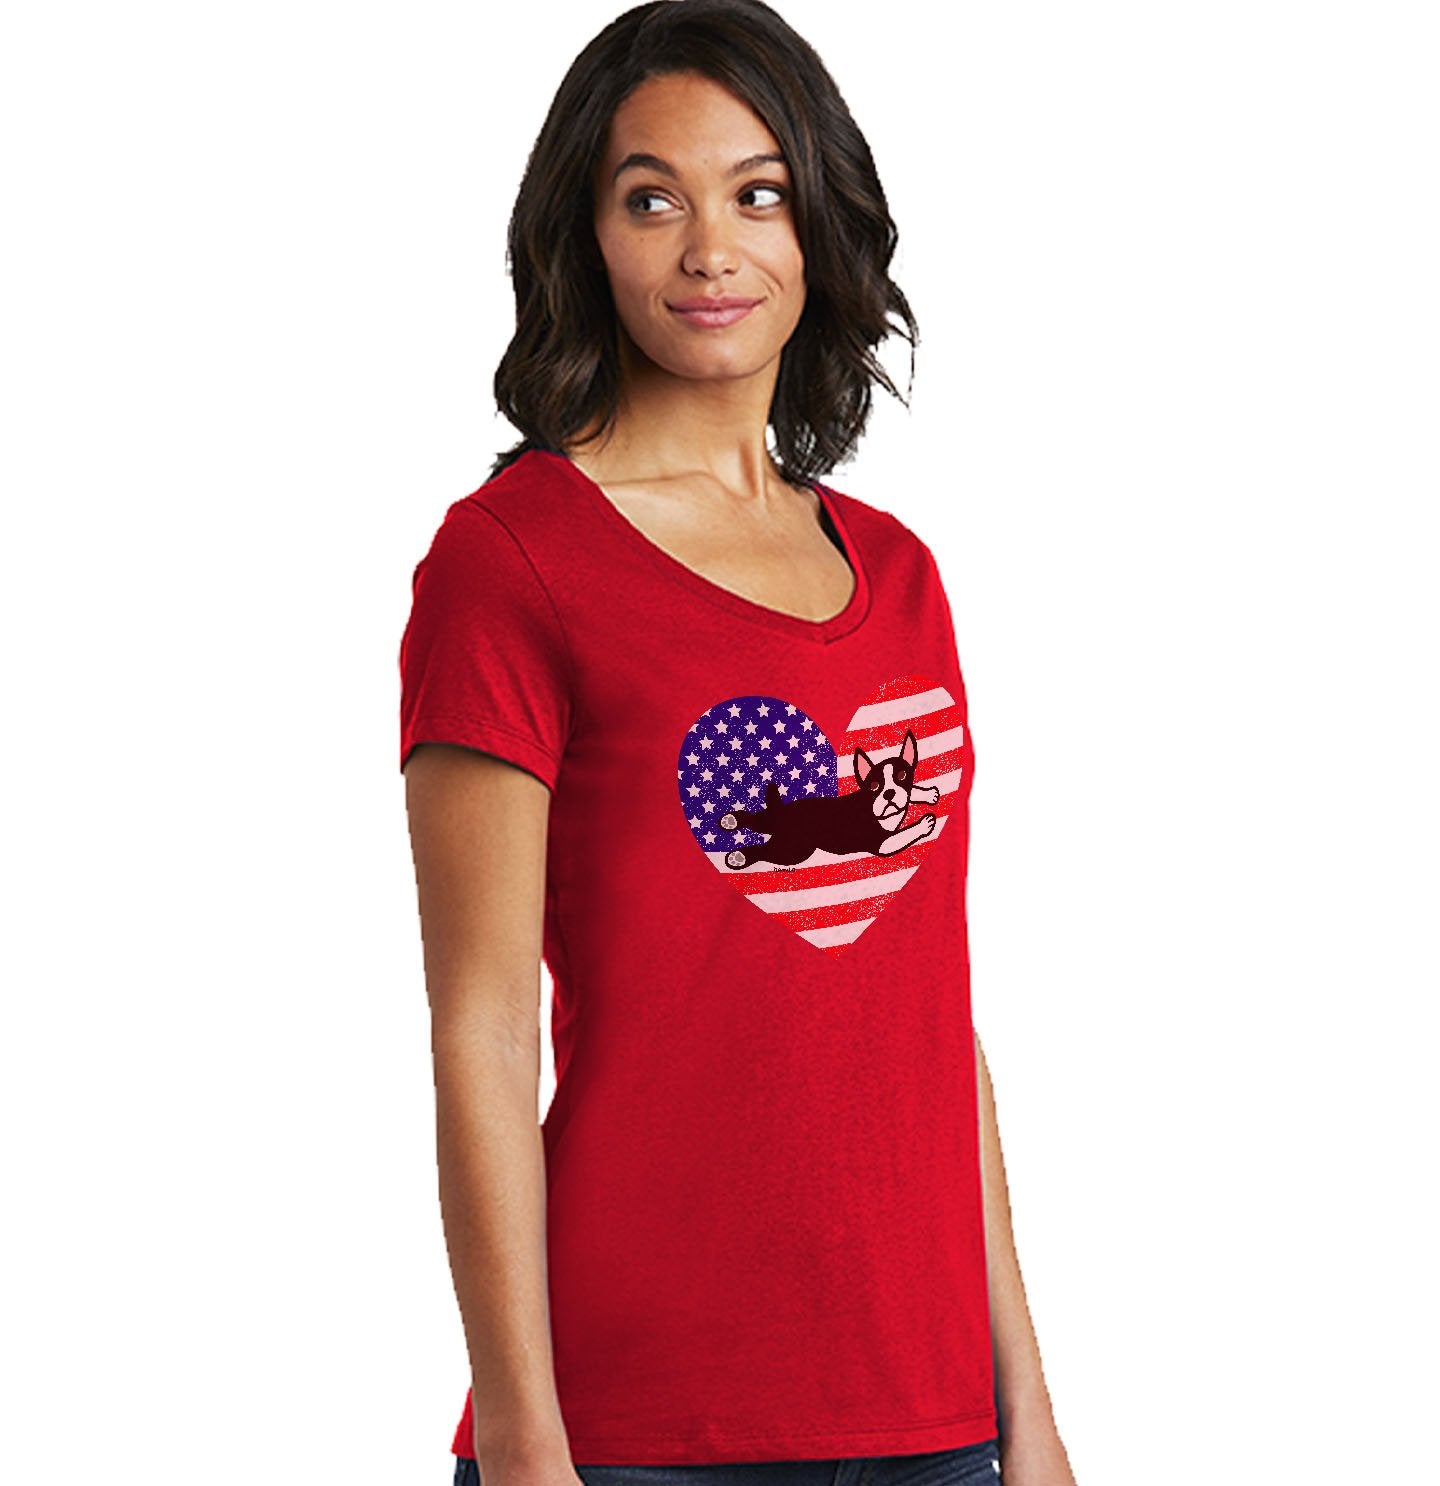 USA Flag Boston Terrier Puppy - Women's V-Neck T-Shirt